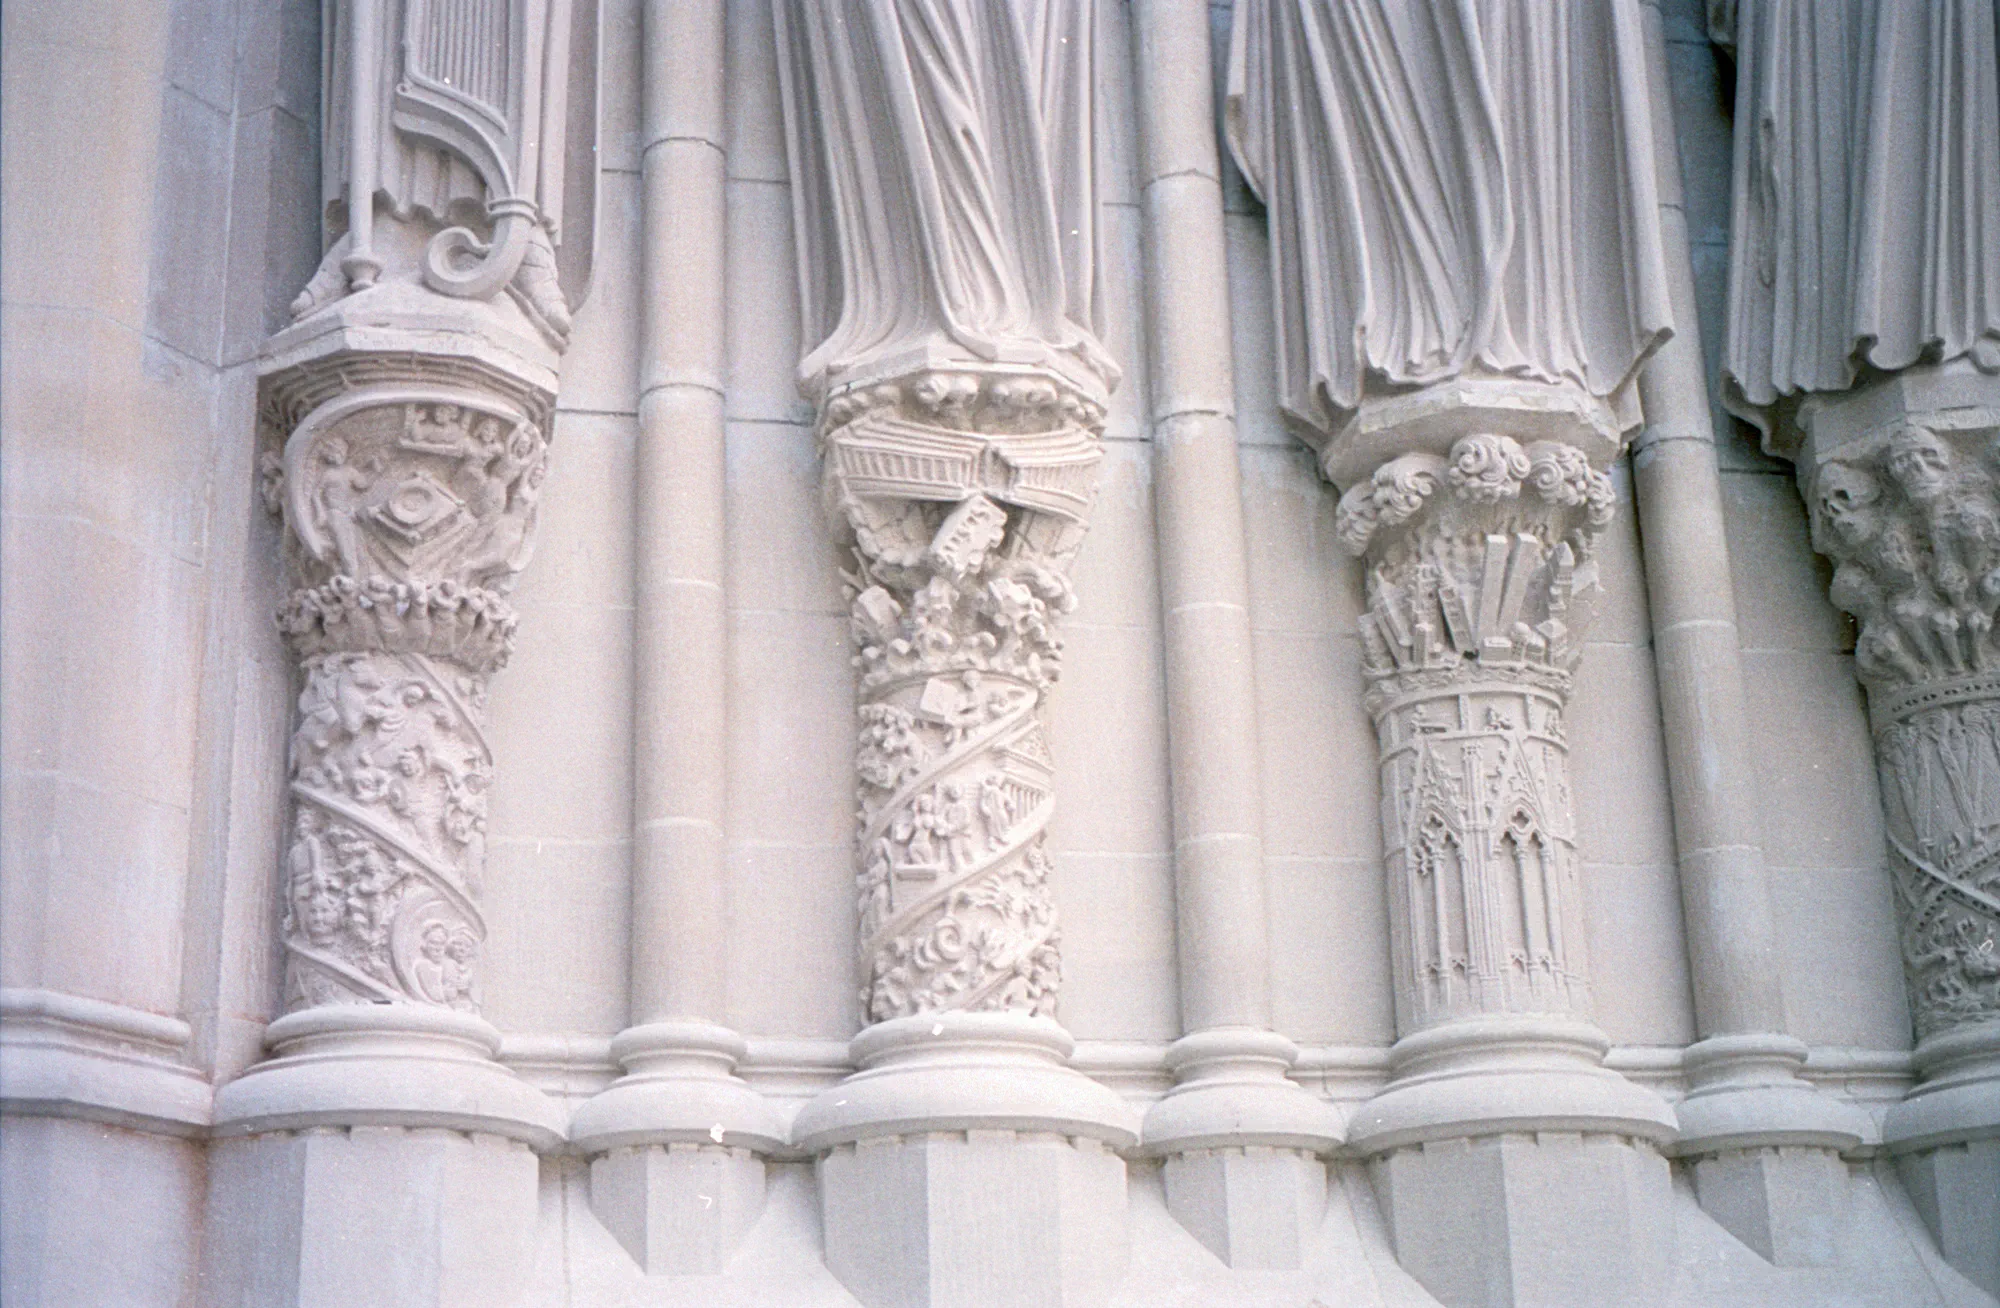 Sculptures of St. John the Divine